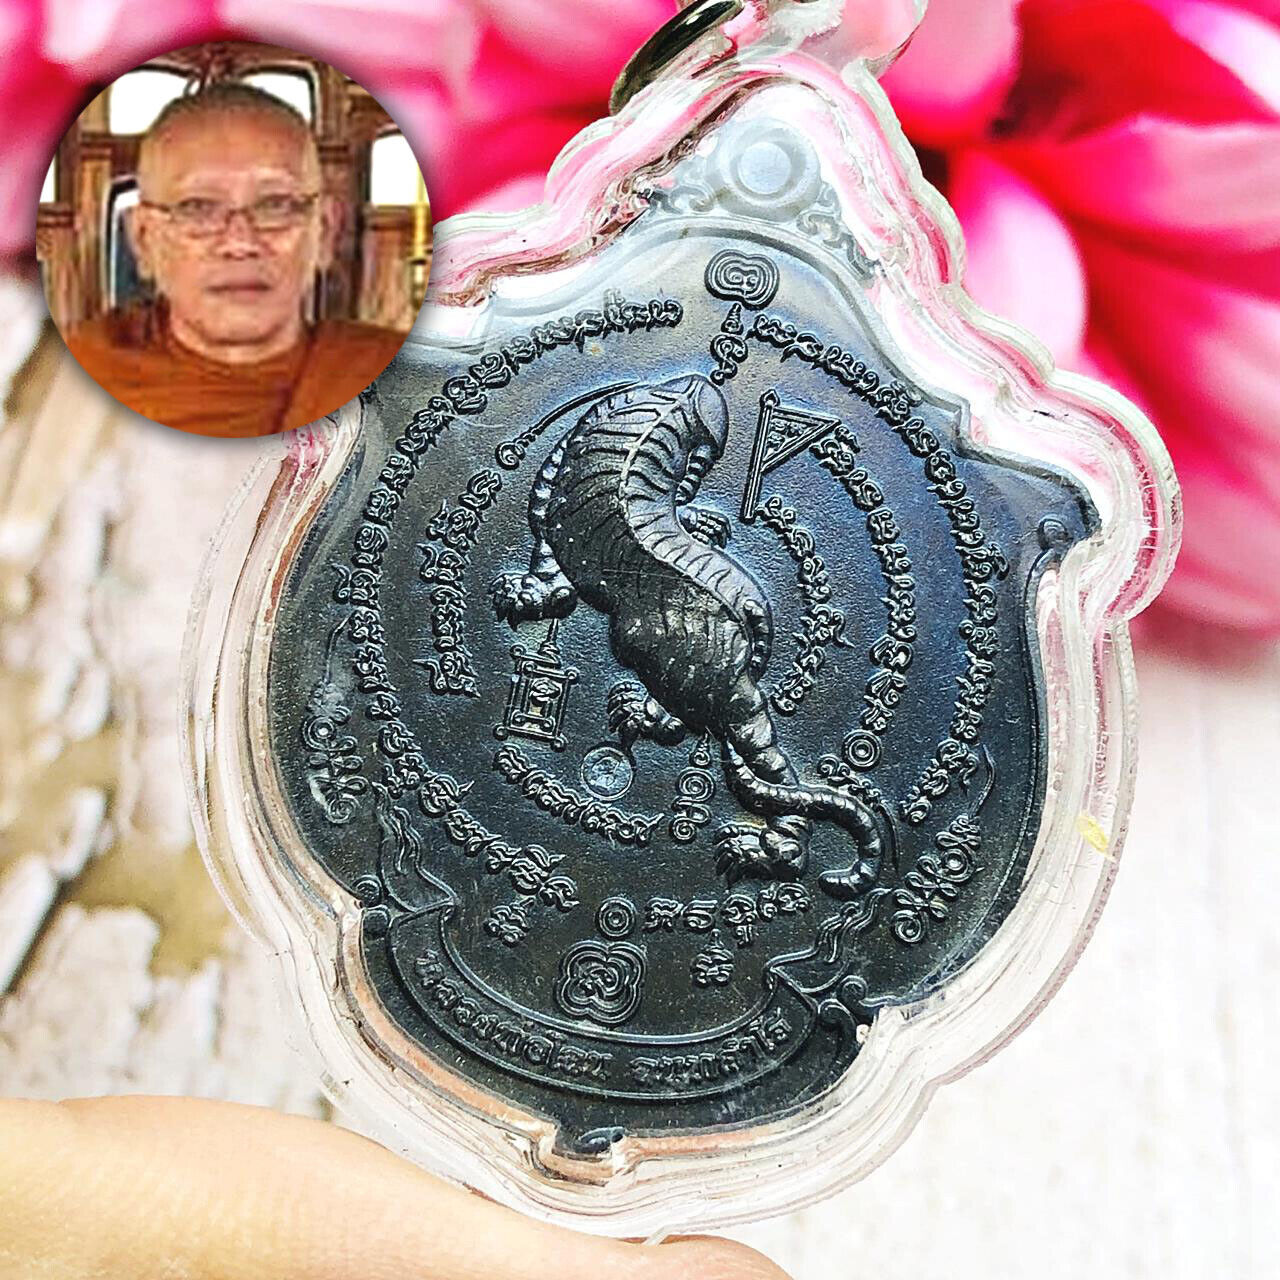 Waterproof Medal Lp Chanai Tiger Cut Head Command Mind Leader Thai Amulet #16554